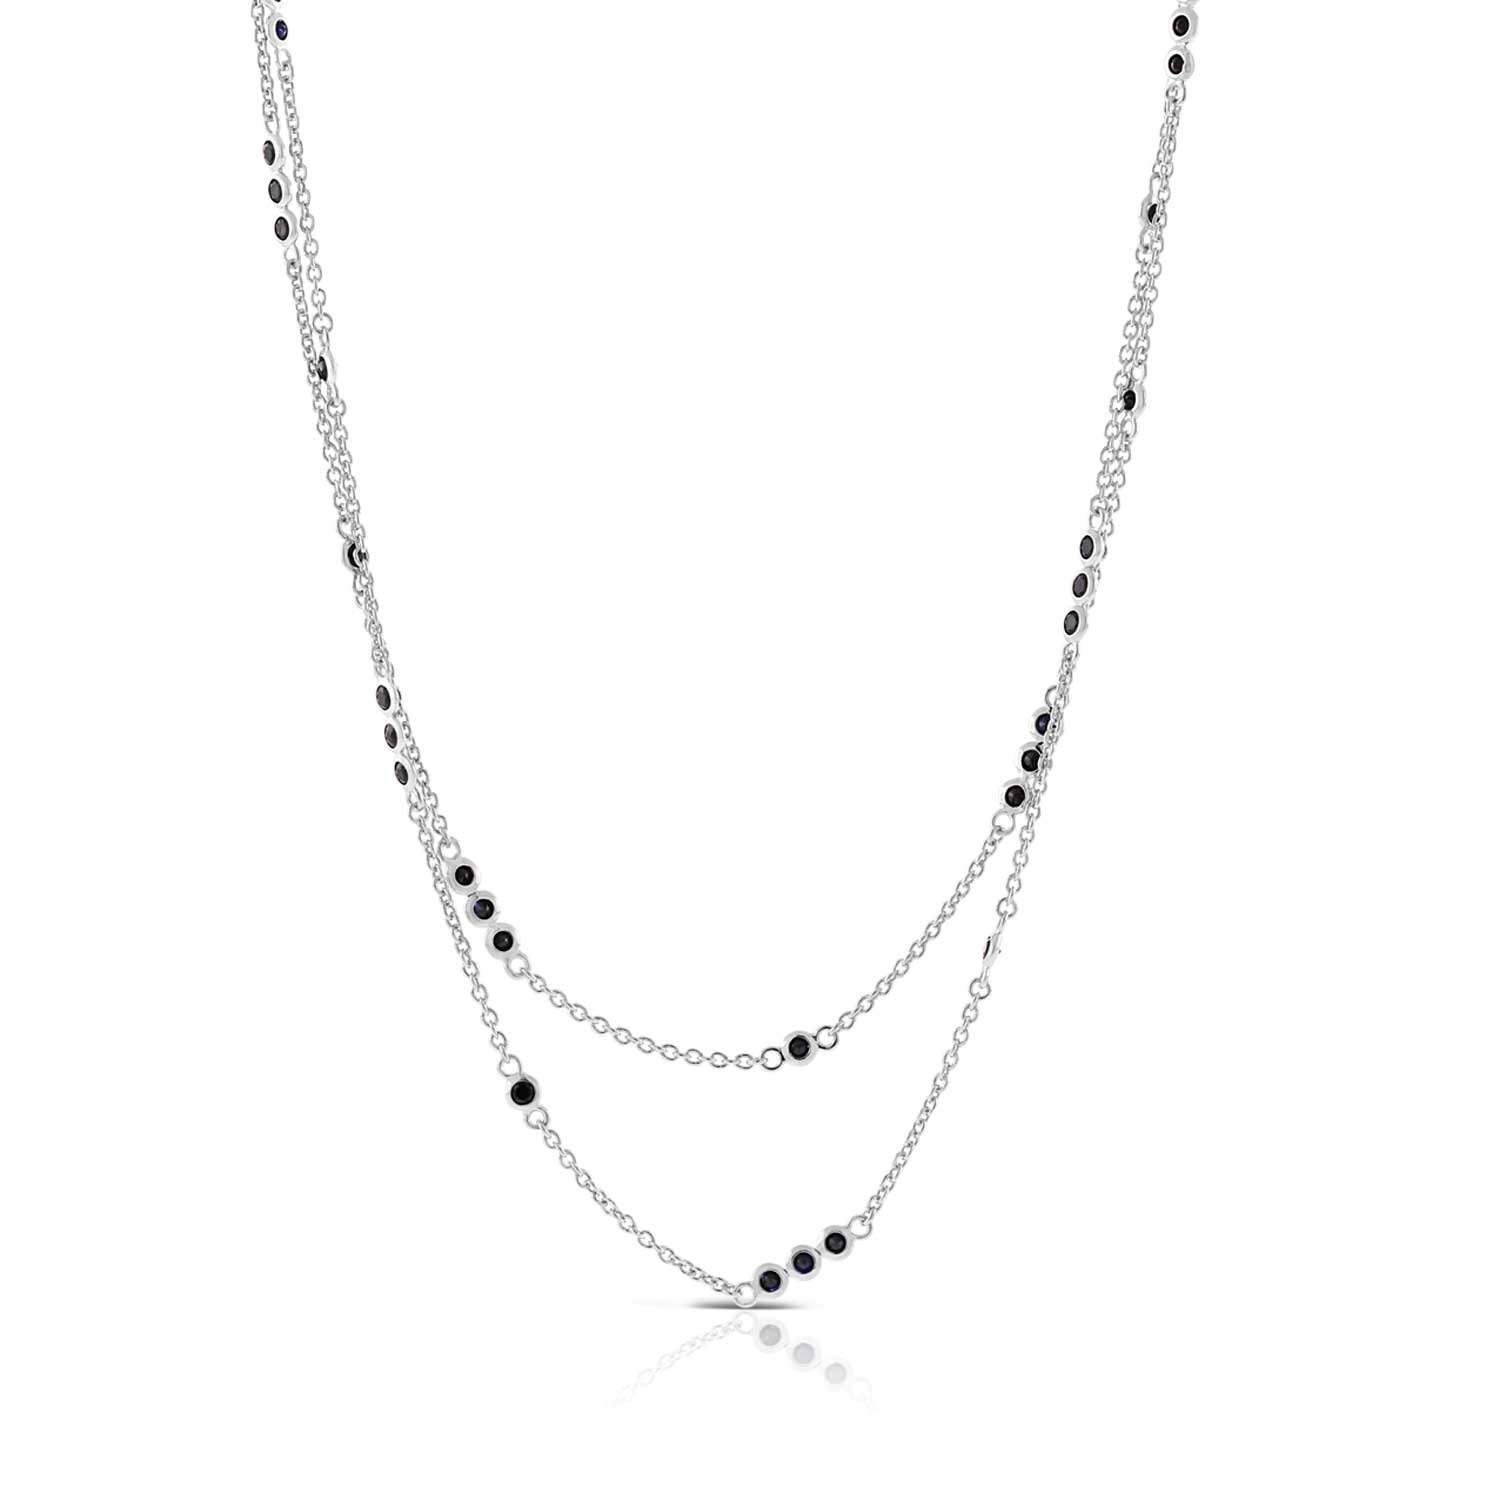 Lisa Bridge Black Sapphire Necklace, 36